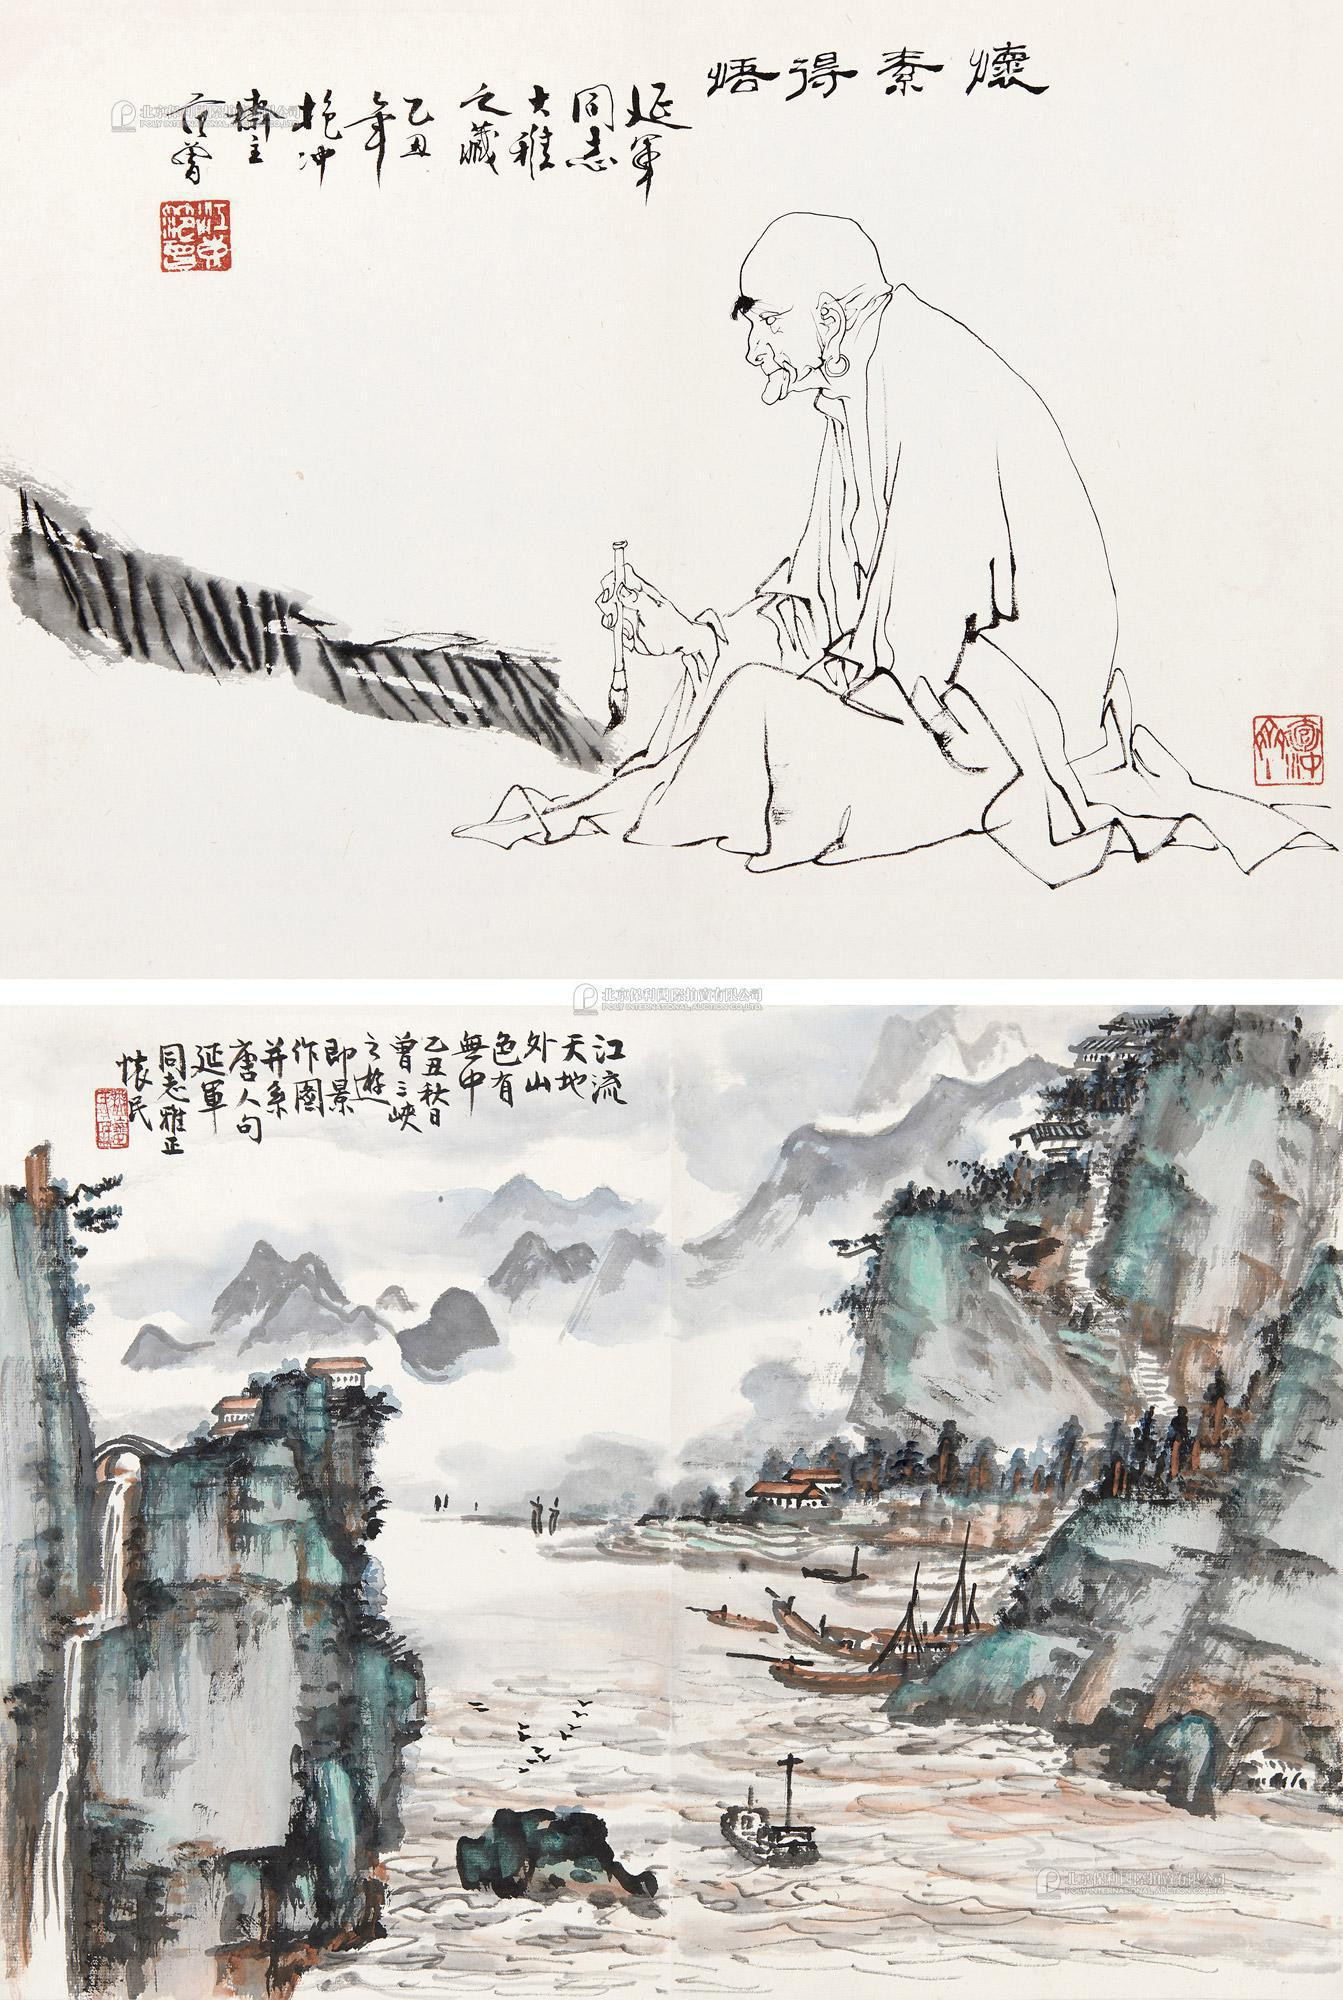 Monk Huai Su and Landscape of Sanxia